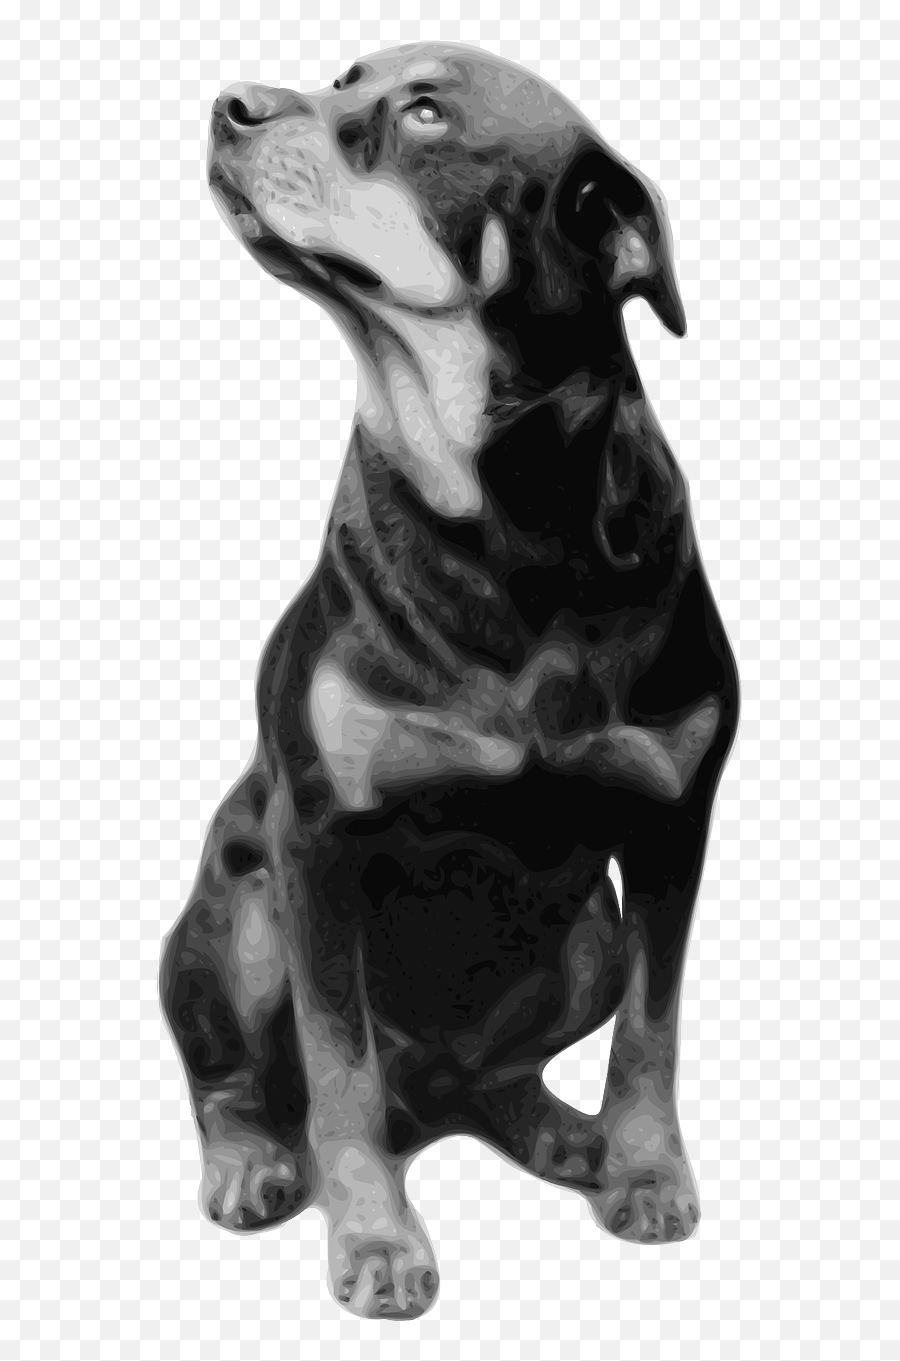 Dog Pet Rottweiler Breed Domestic - Rottweiler Dog Quotes Emoji,Dog Walking Emoji